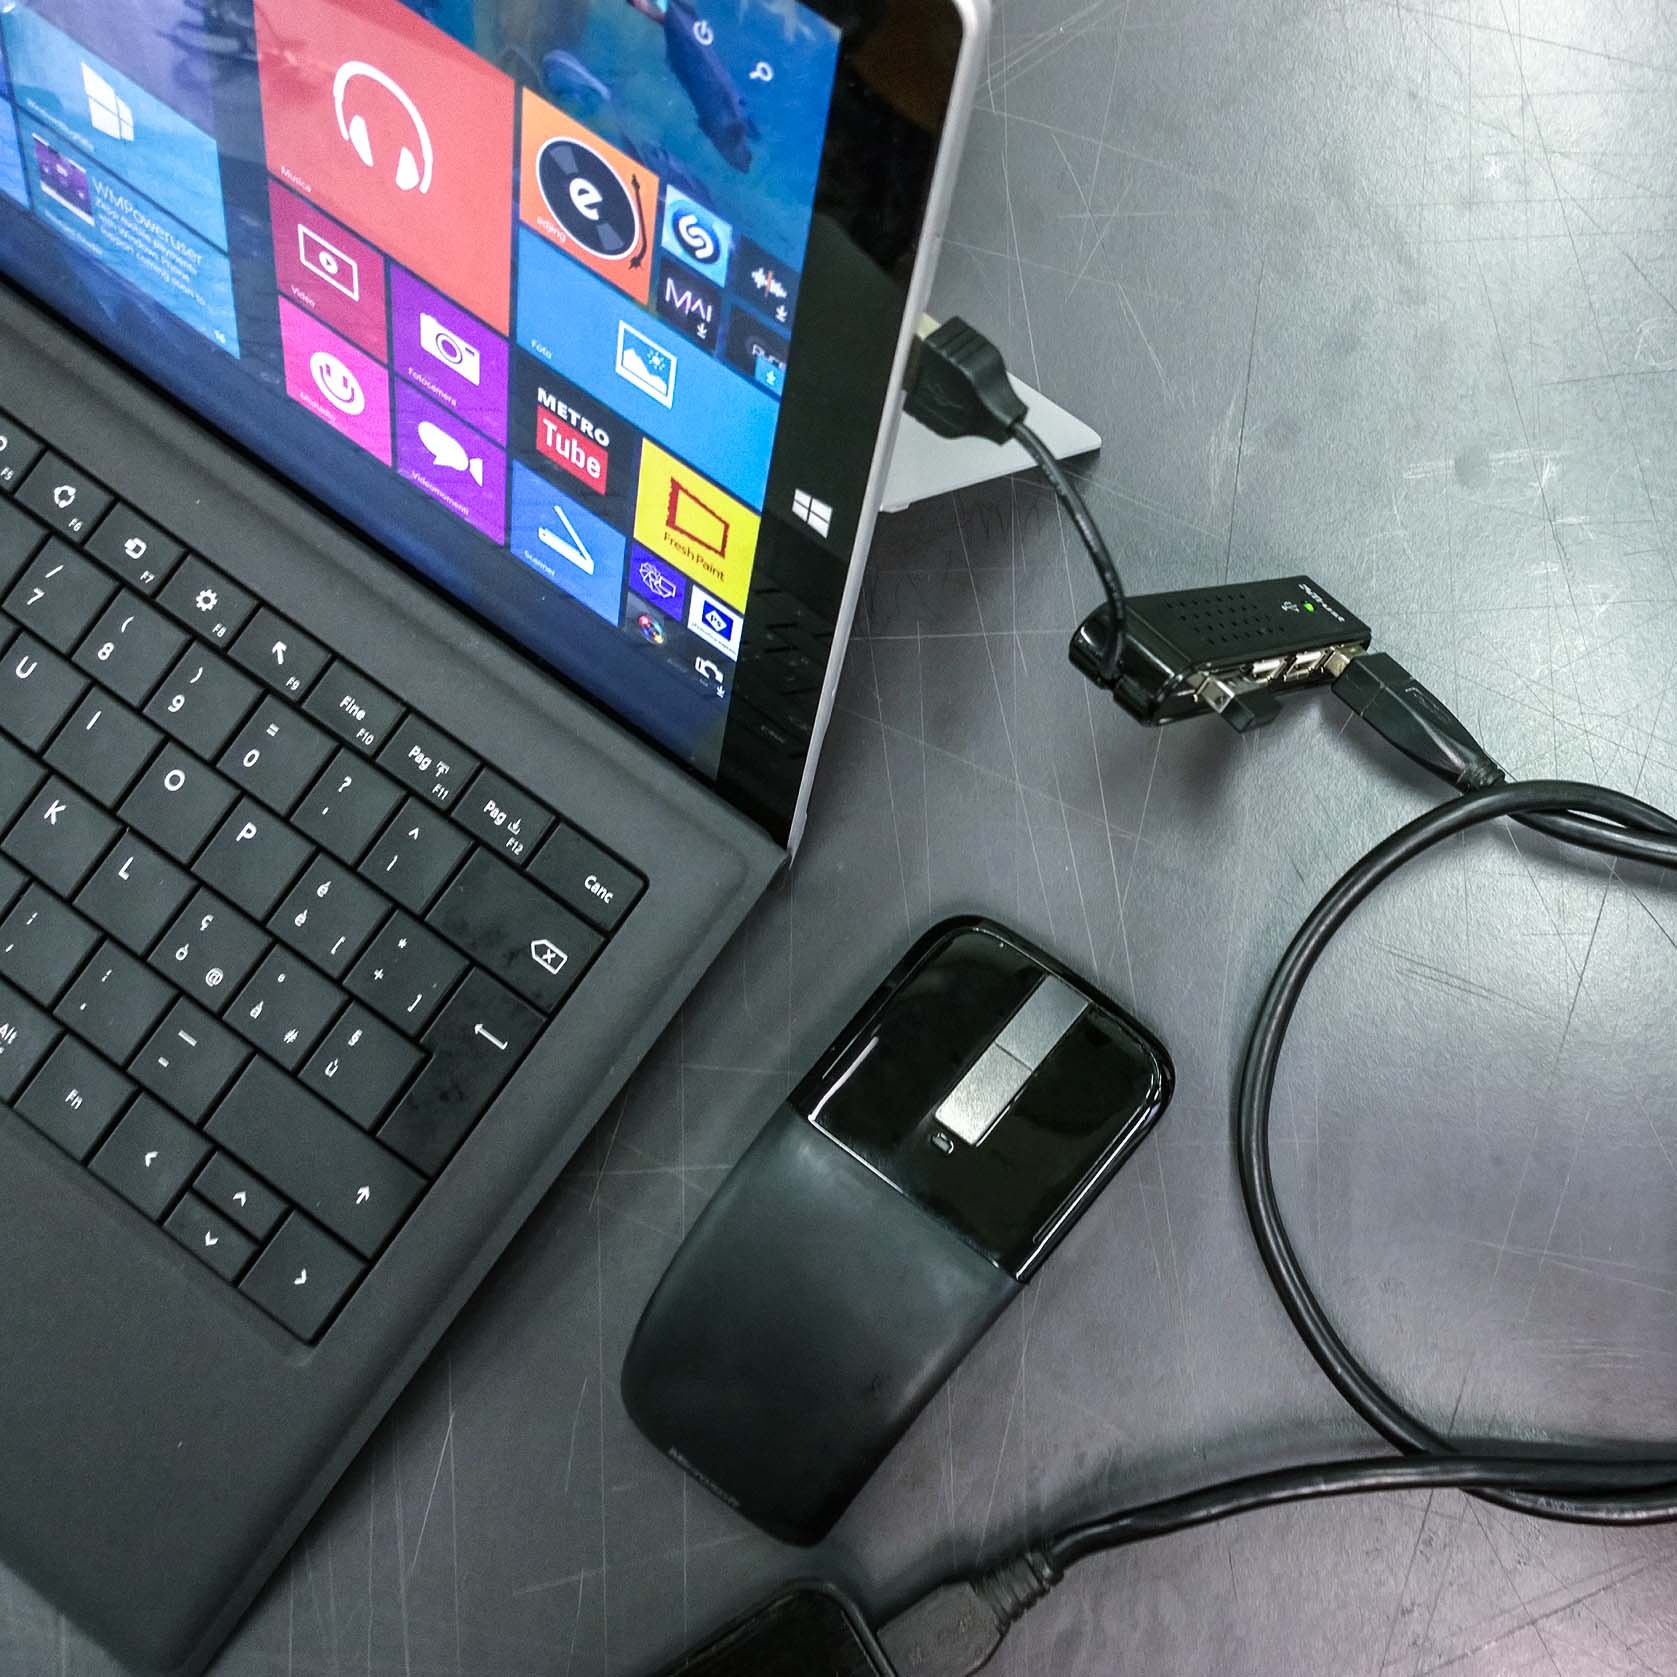 Surface USB Hub bug HDD